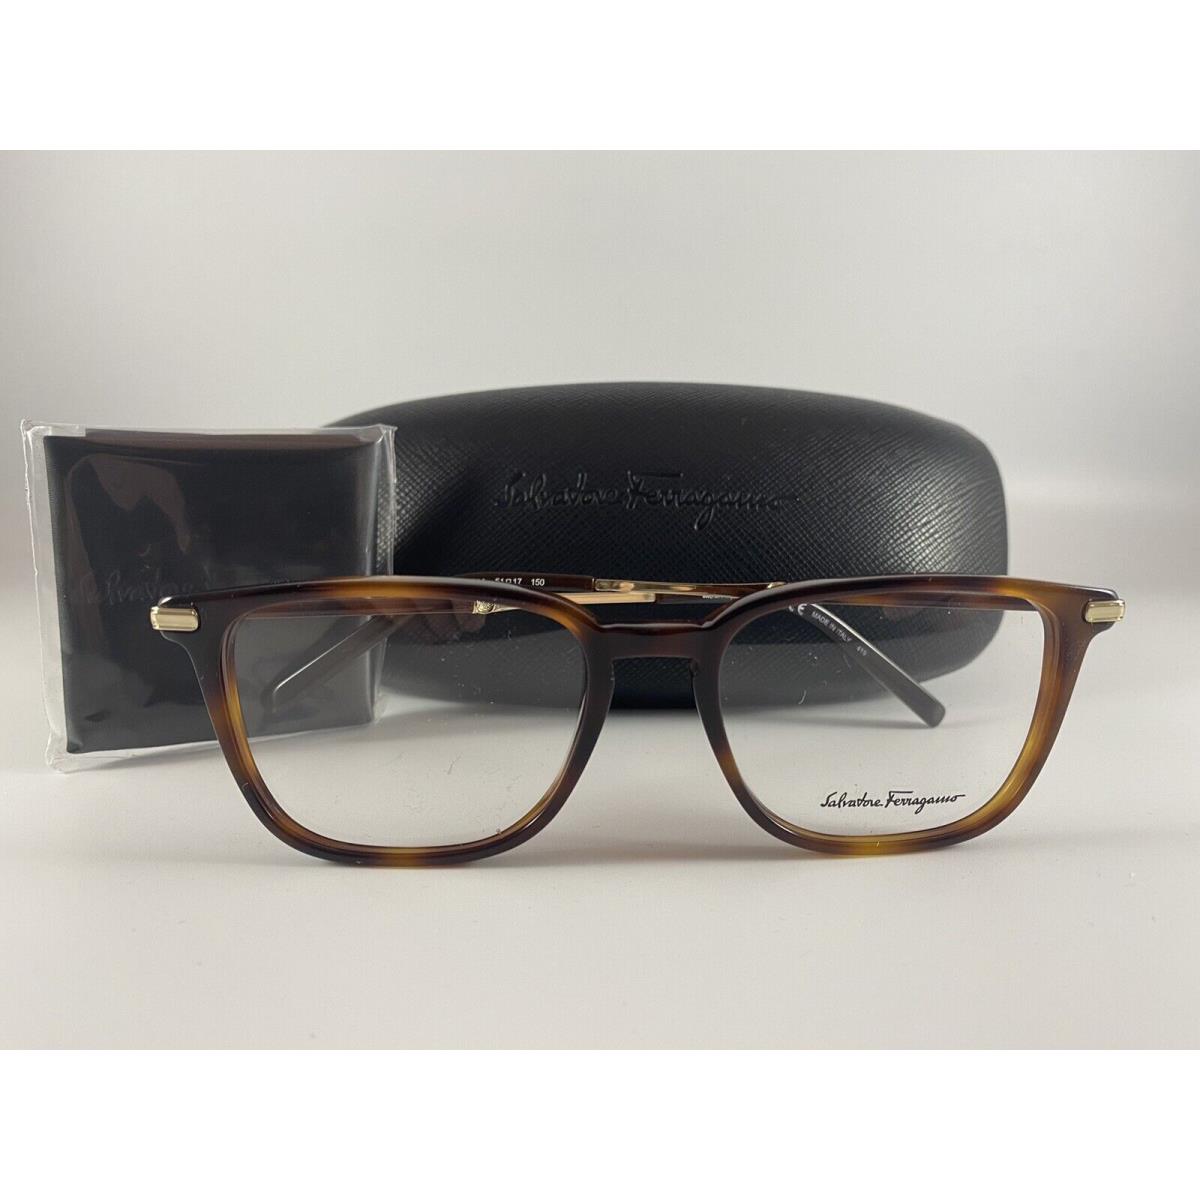 Salvatore Ferragamo eyeglasses  - 214 Frame 1